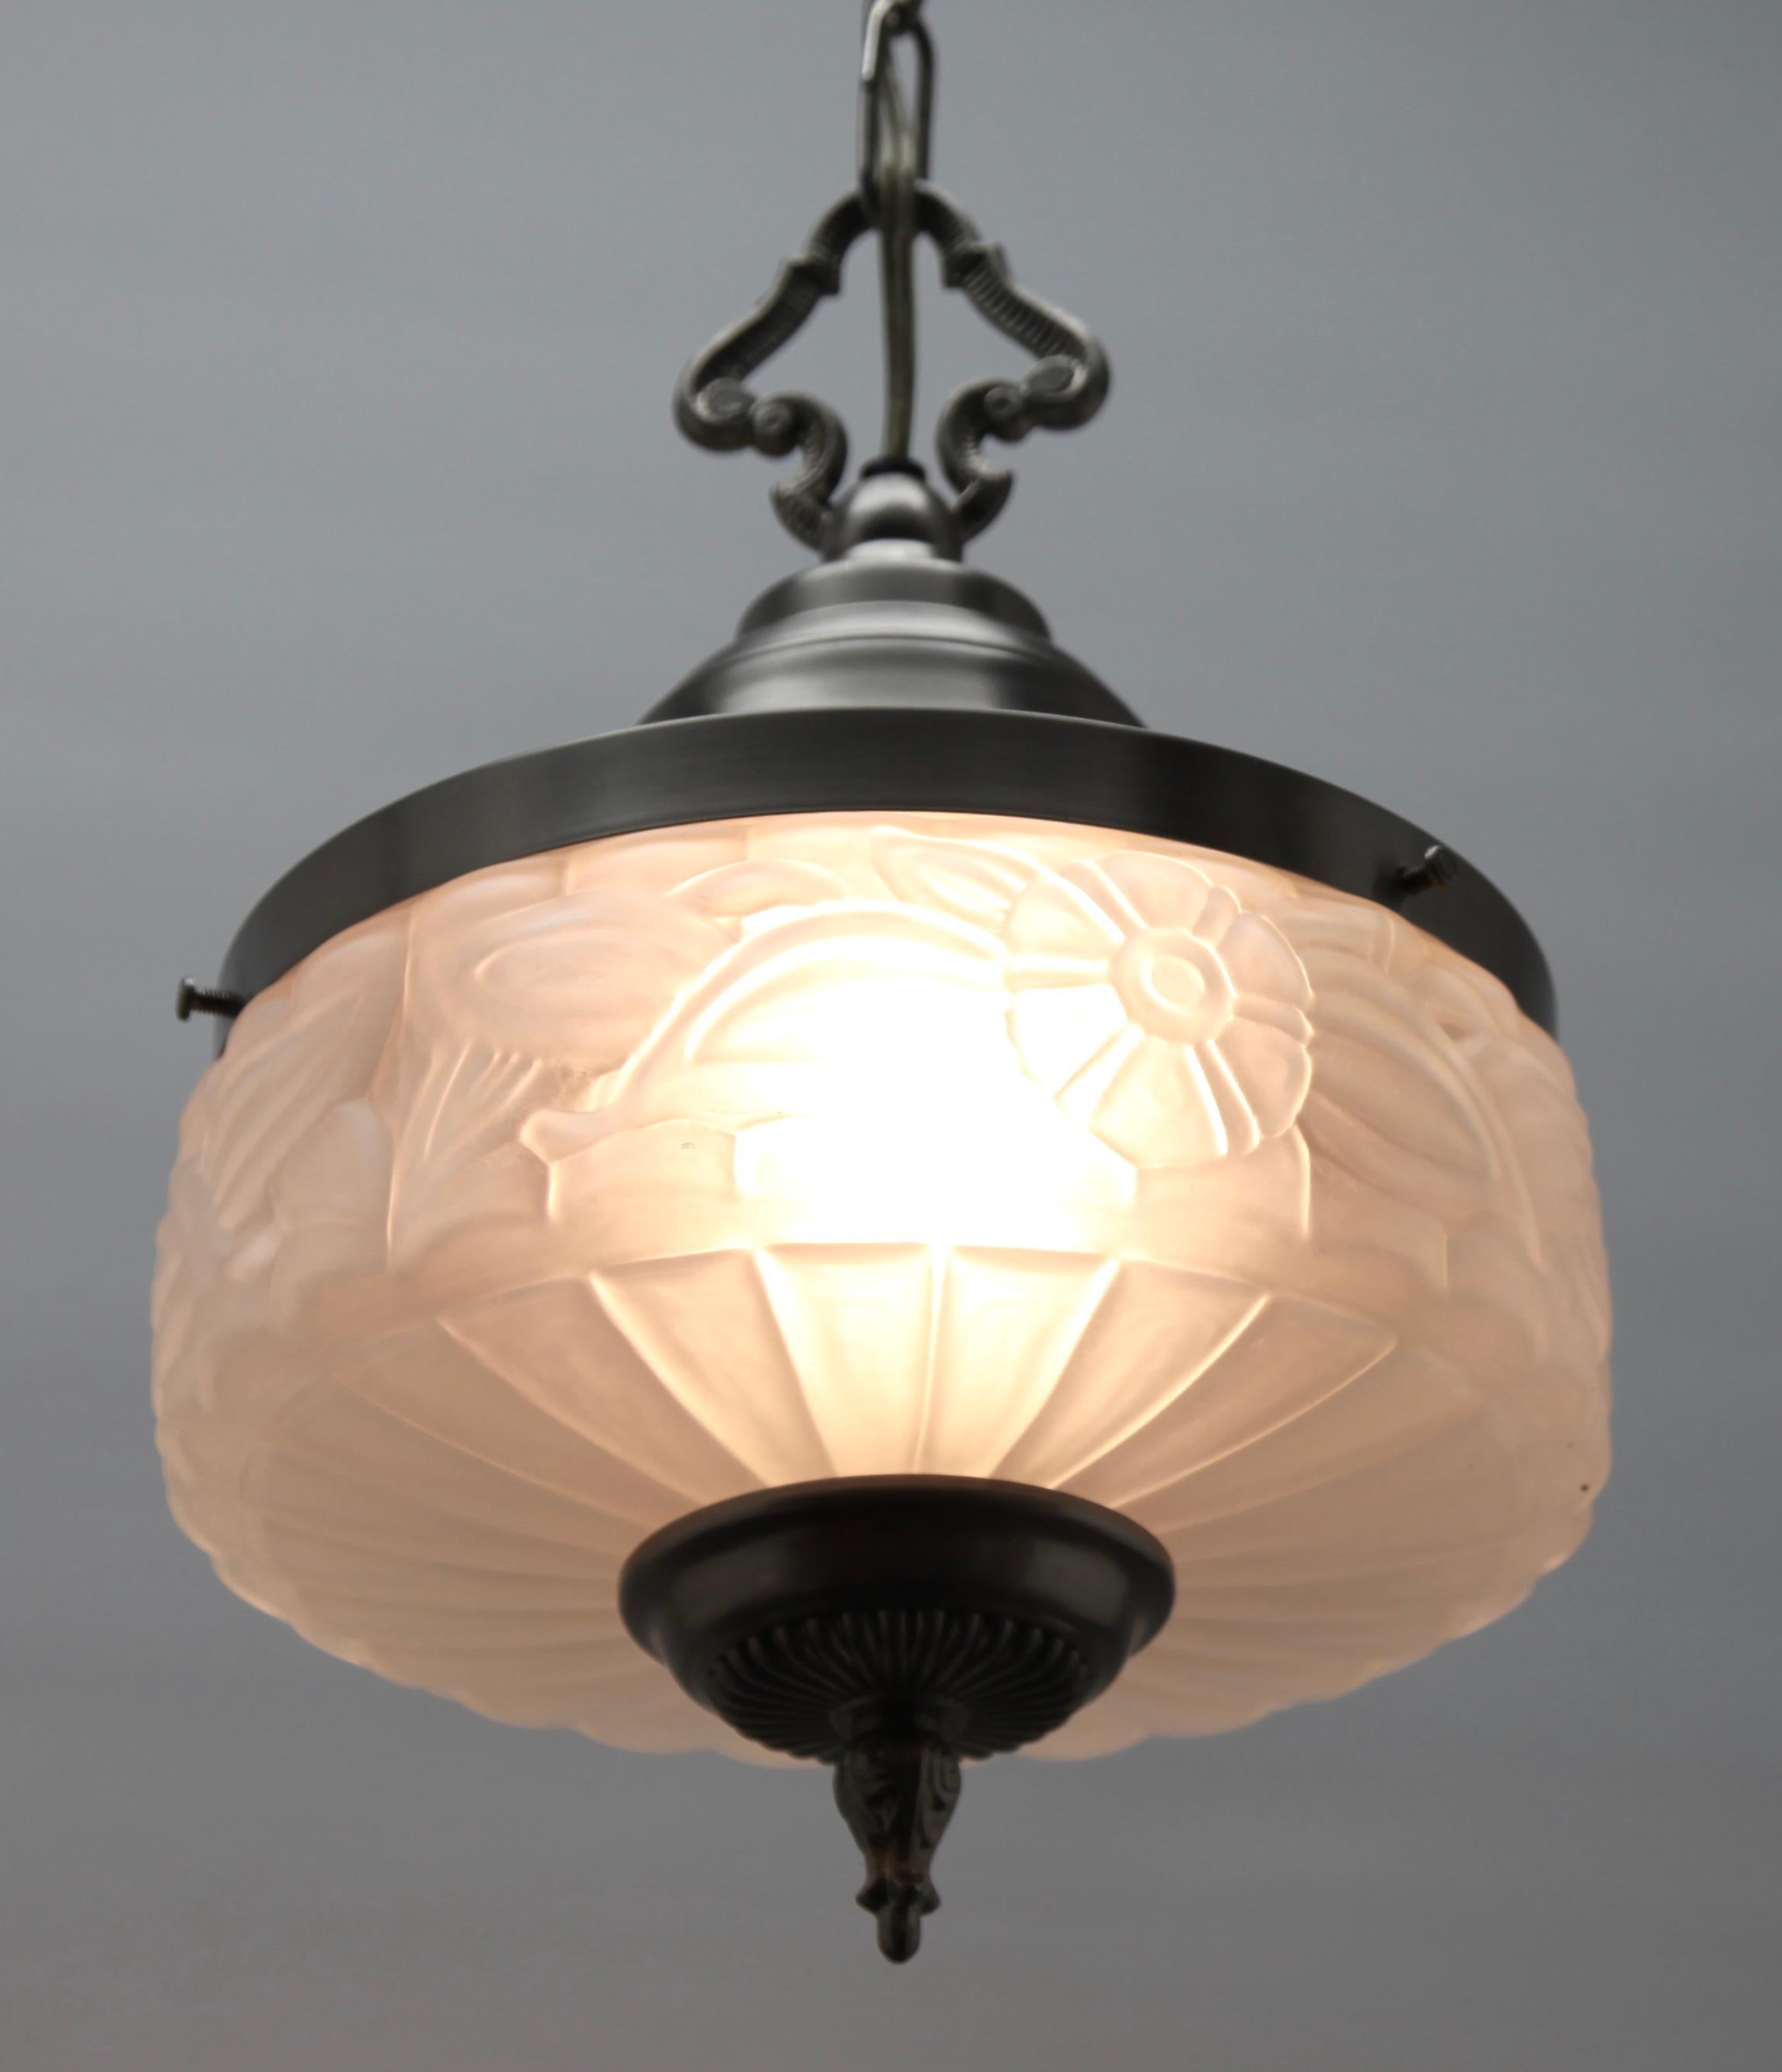 Art Glass Style Art Deco Ceiling Lamp, Scailmont Belgium Glass Shade, 1950s